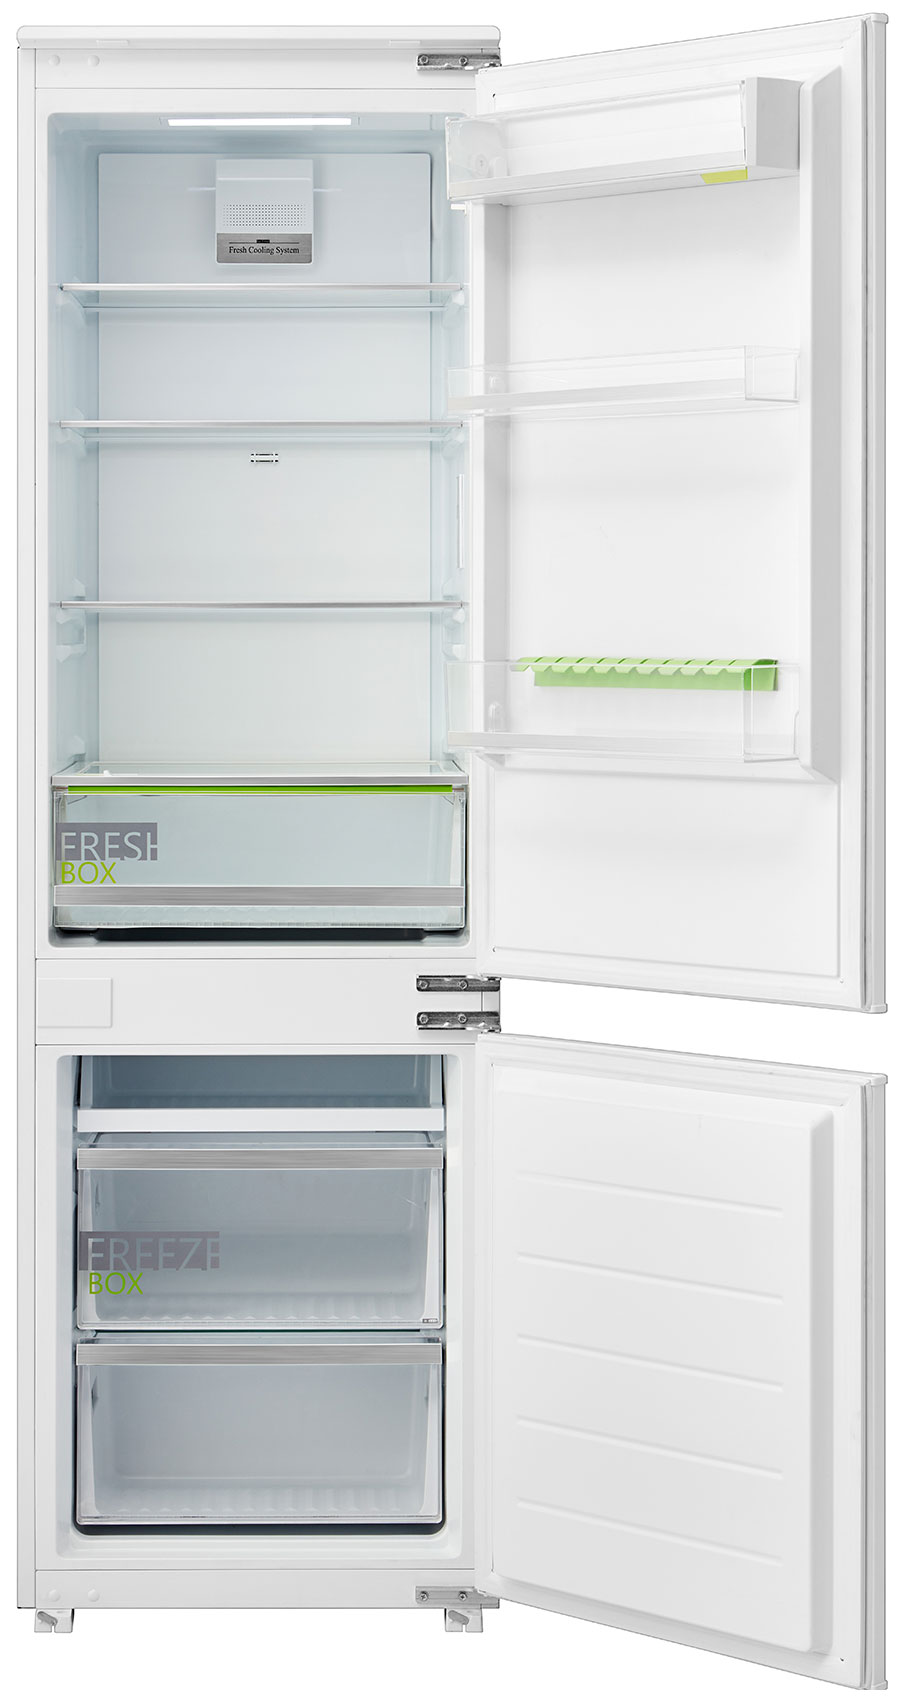 Встраиваемый двухкамерный холодильник Midea MDRE353FGF01 холодильник двухкамерный midea mdrb470mgf46o 185х59 5х66см серебристый